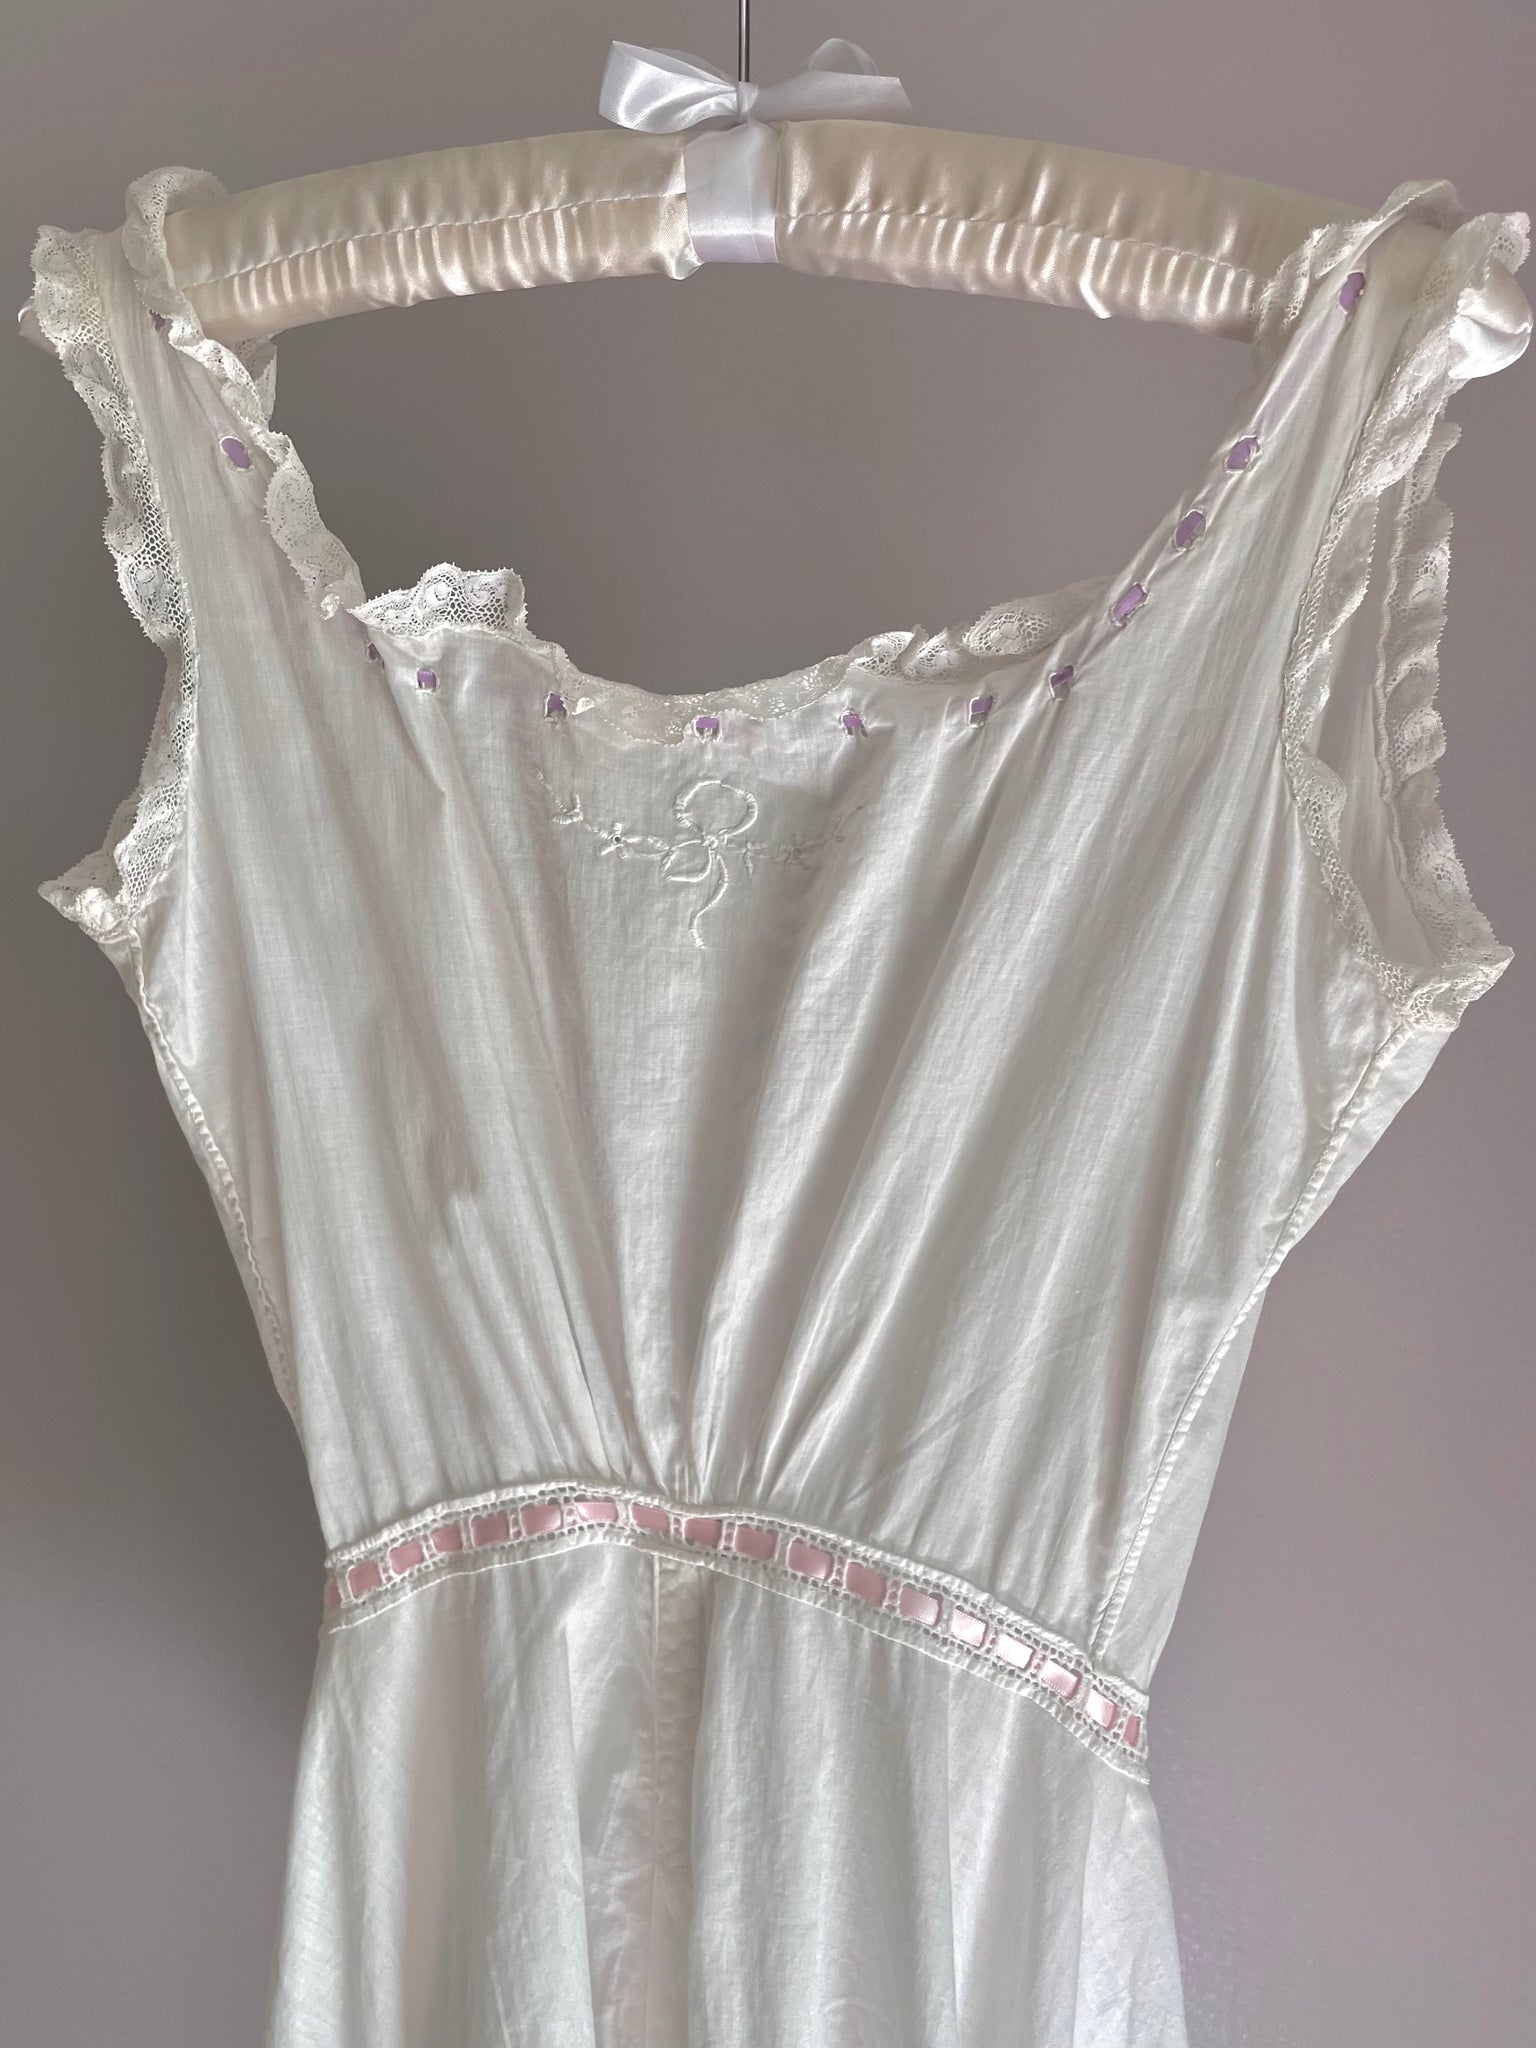 1900s Edwardian Cotton Floral Embroidery Combinations Pink Purple RIbbon Split Crotch